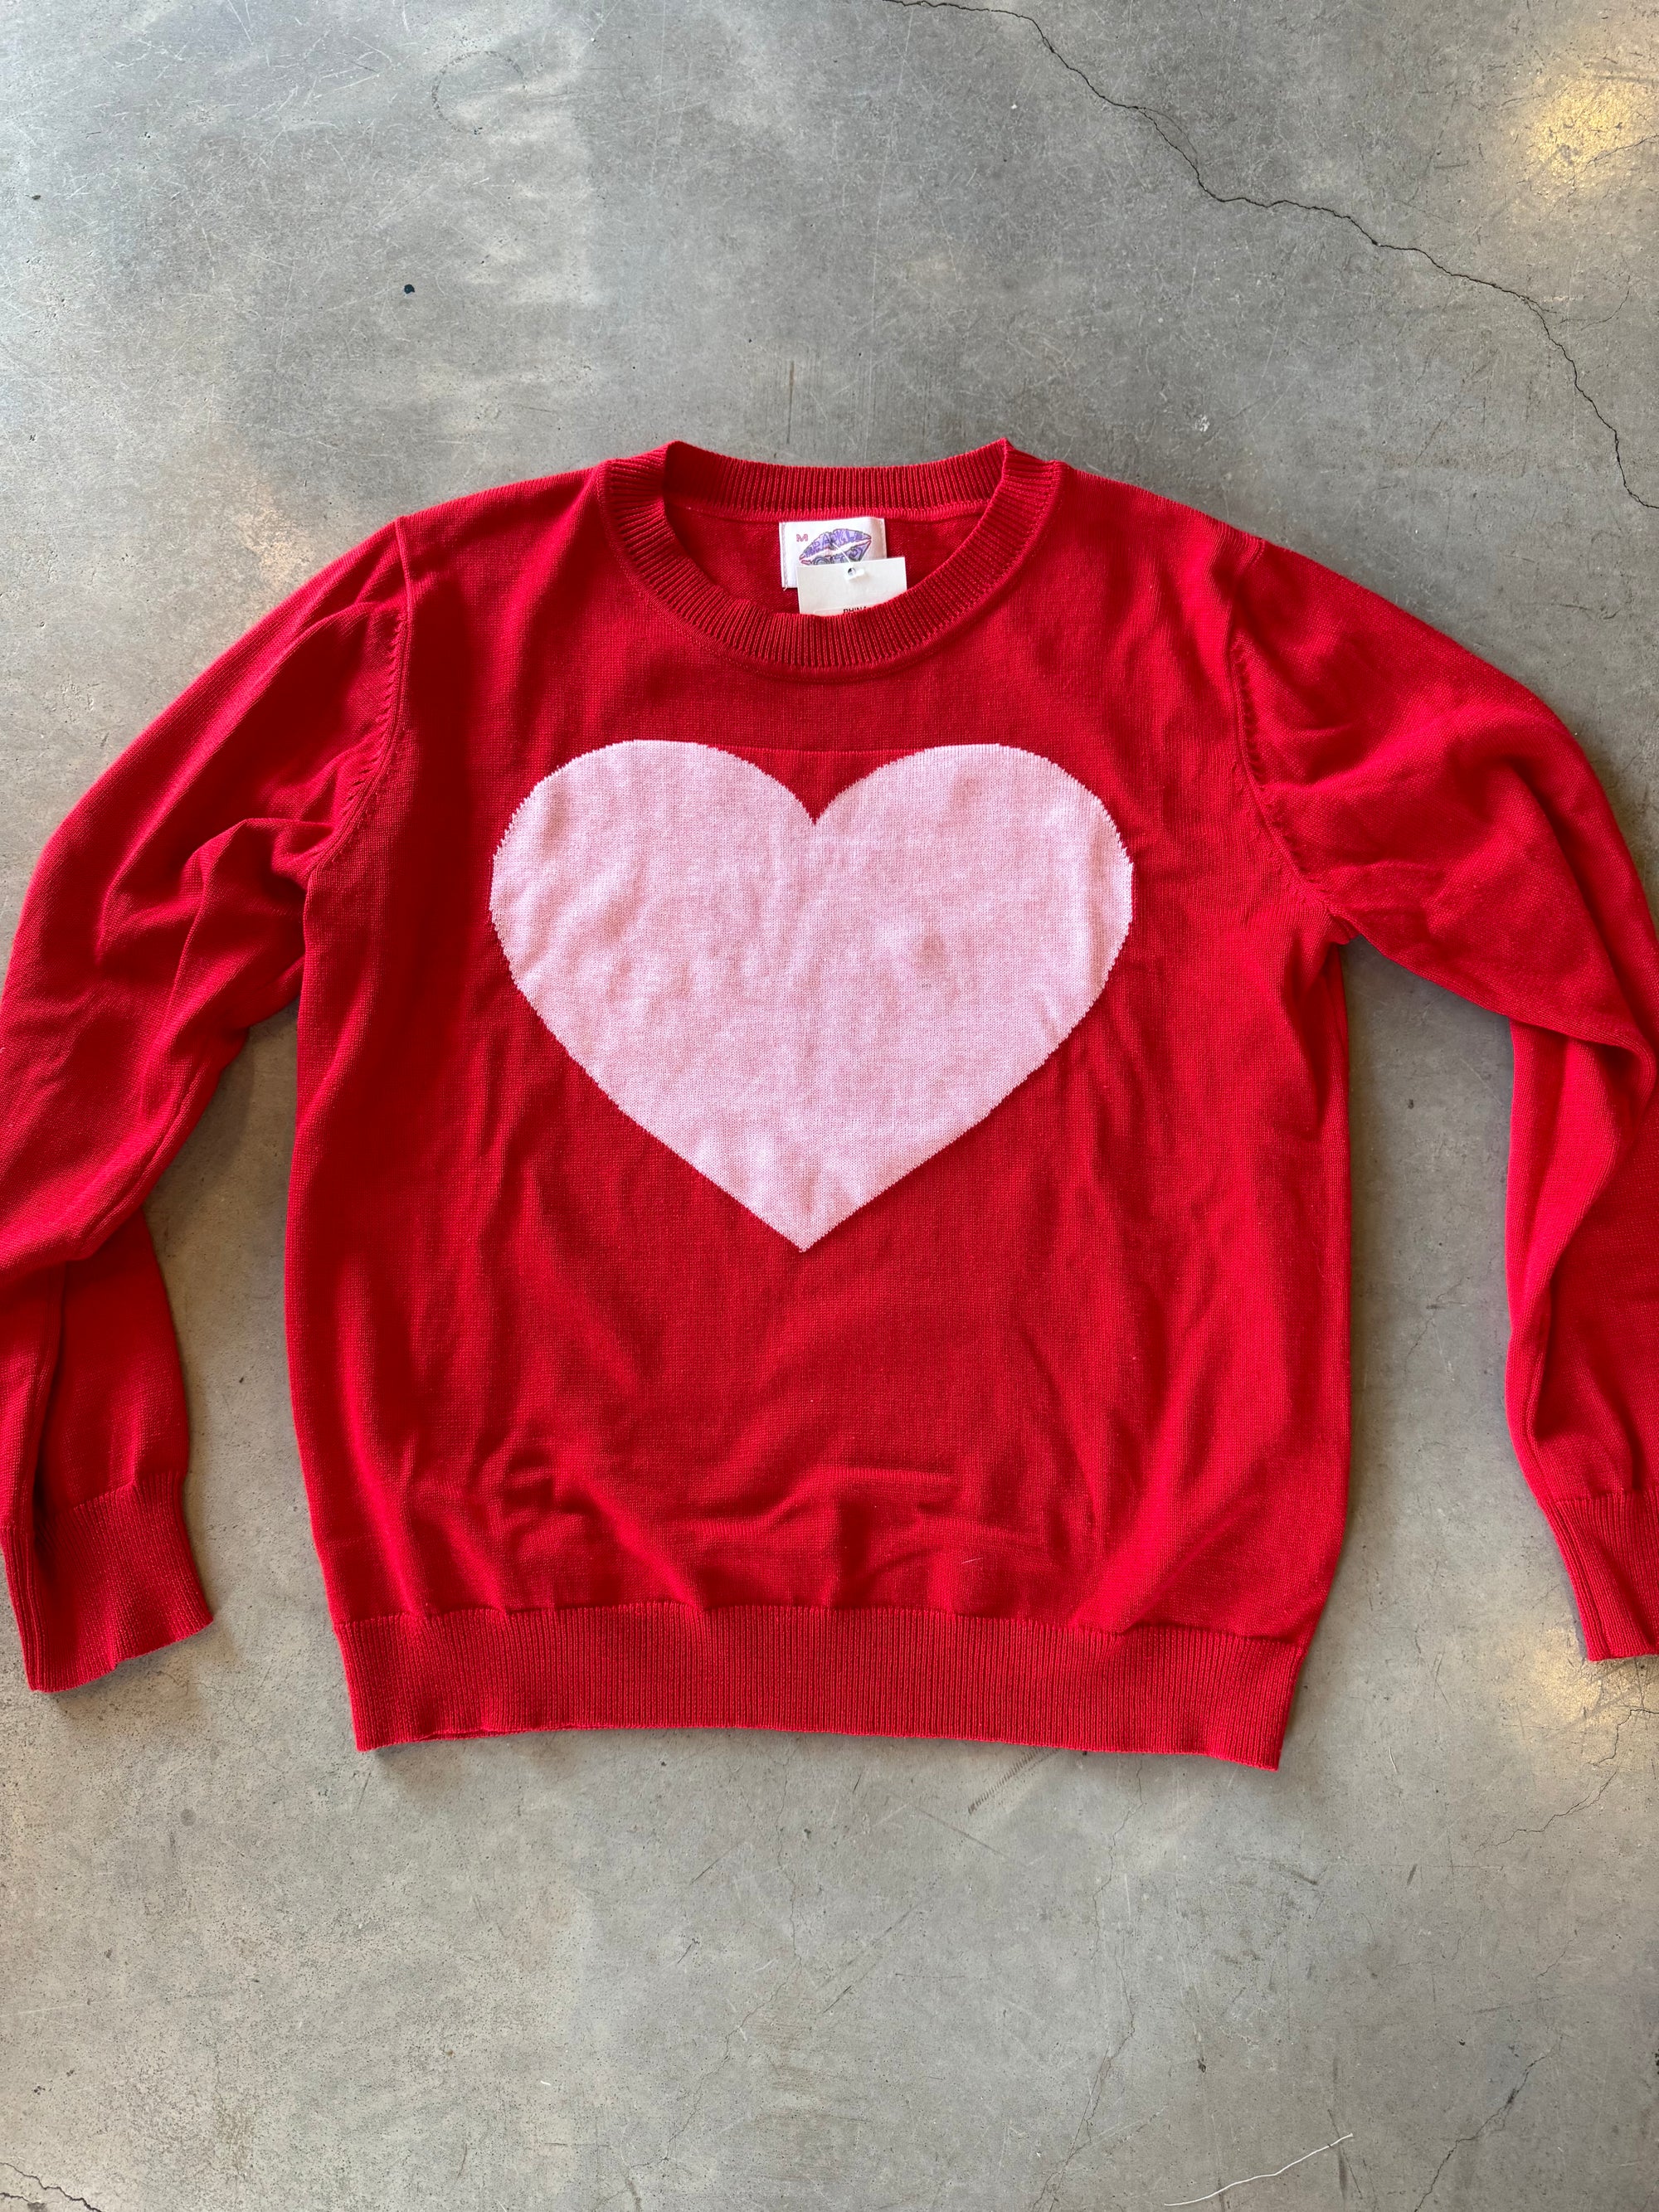 Heart Sweater No Sparkle - XL